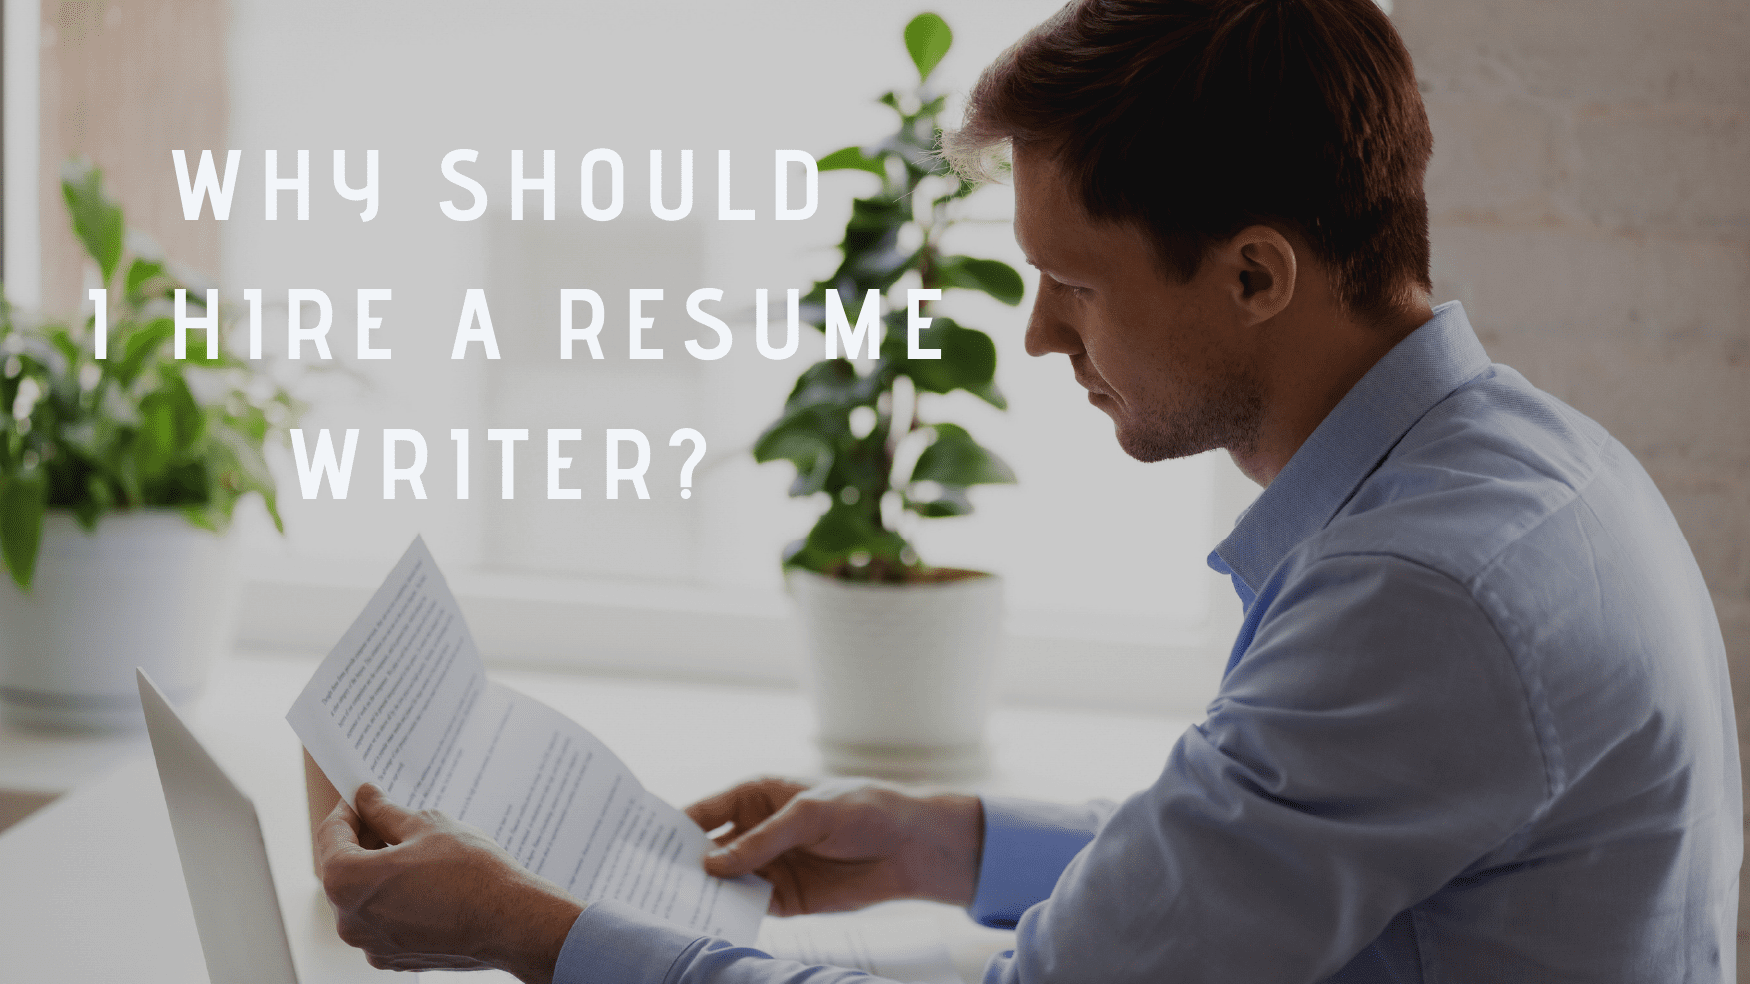 hire a resume writer linkedin